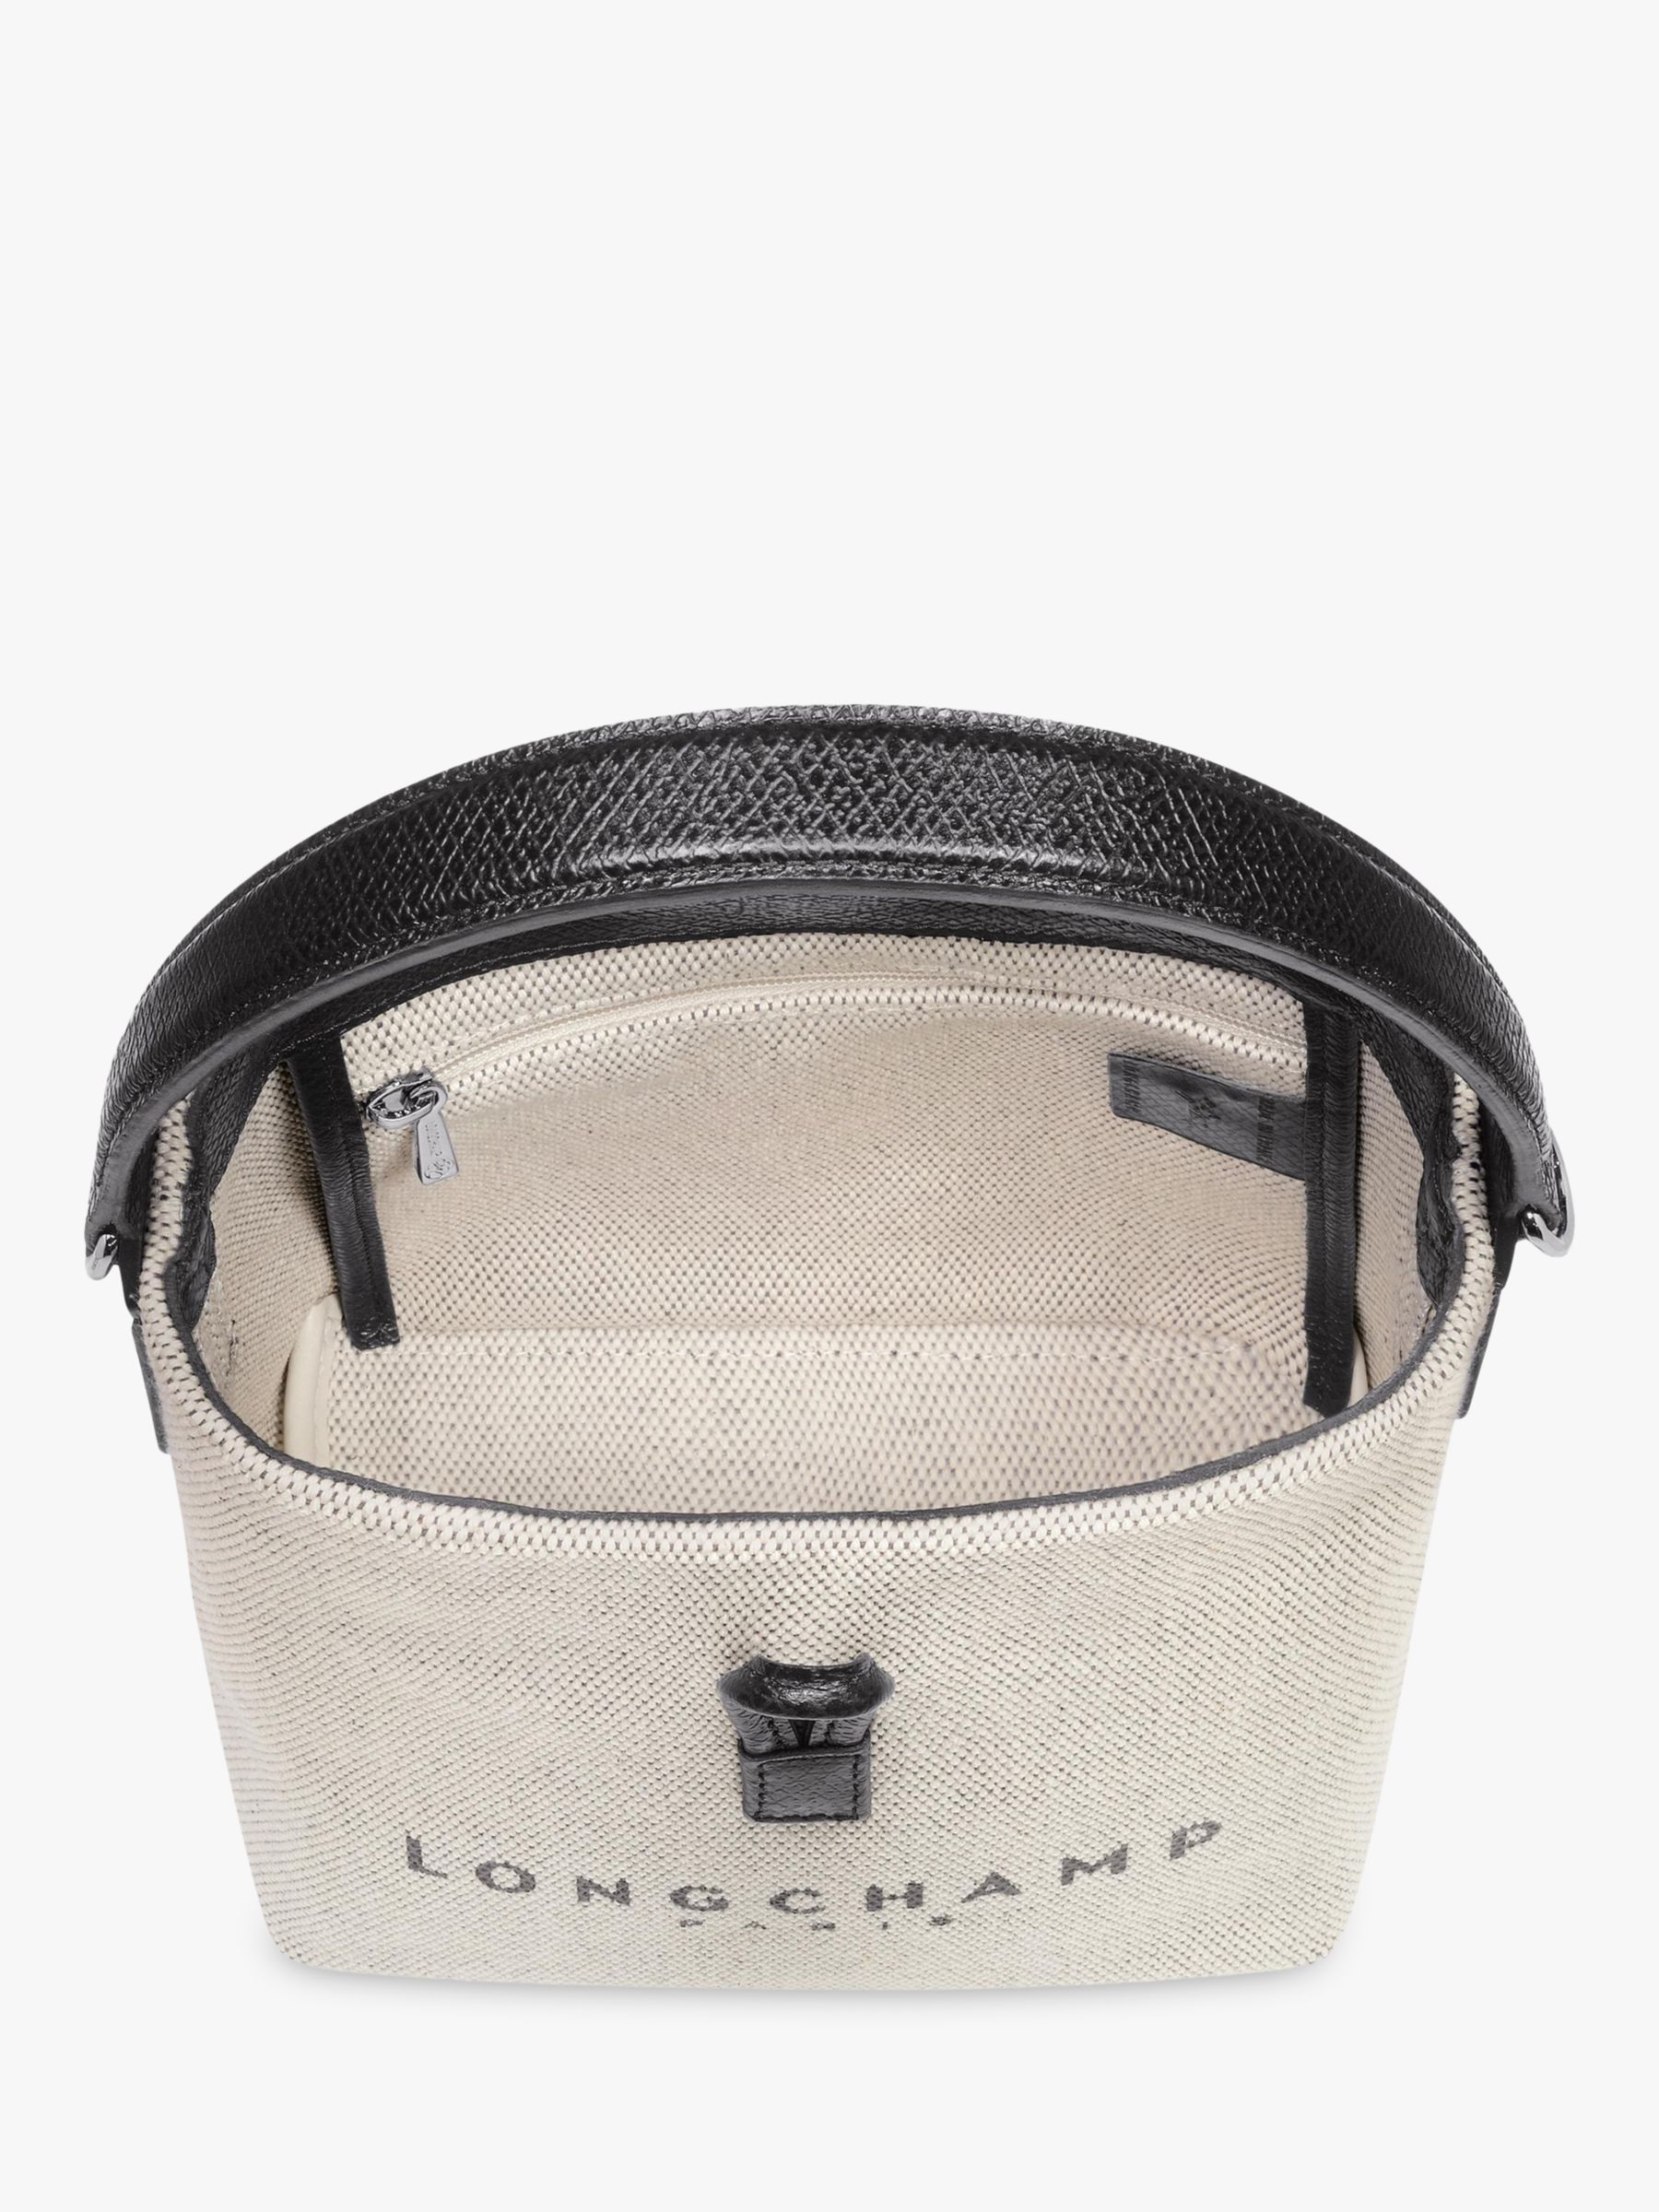 Longchamp Roseau Large Canvas Shopper Bag, Ecru at John Lewis